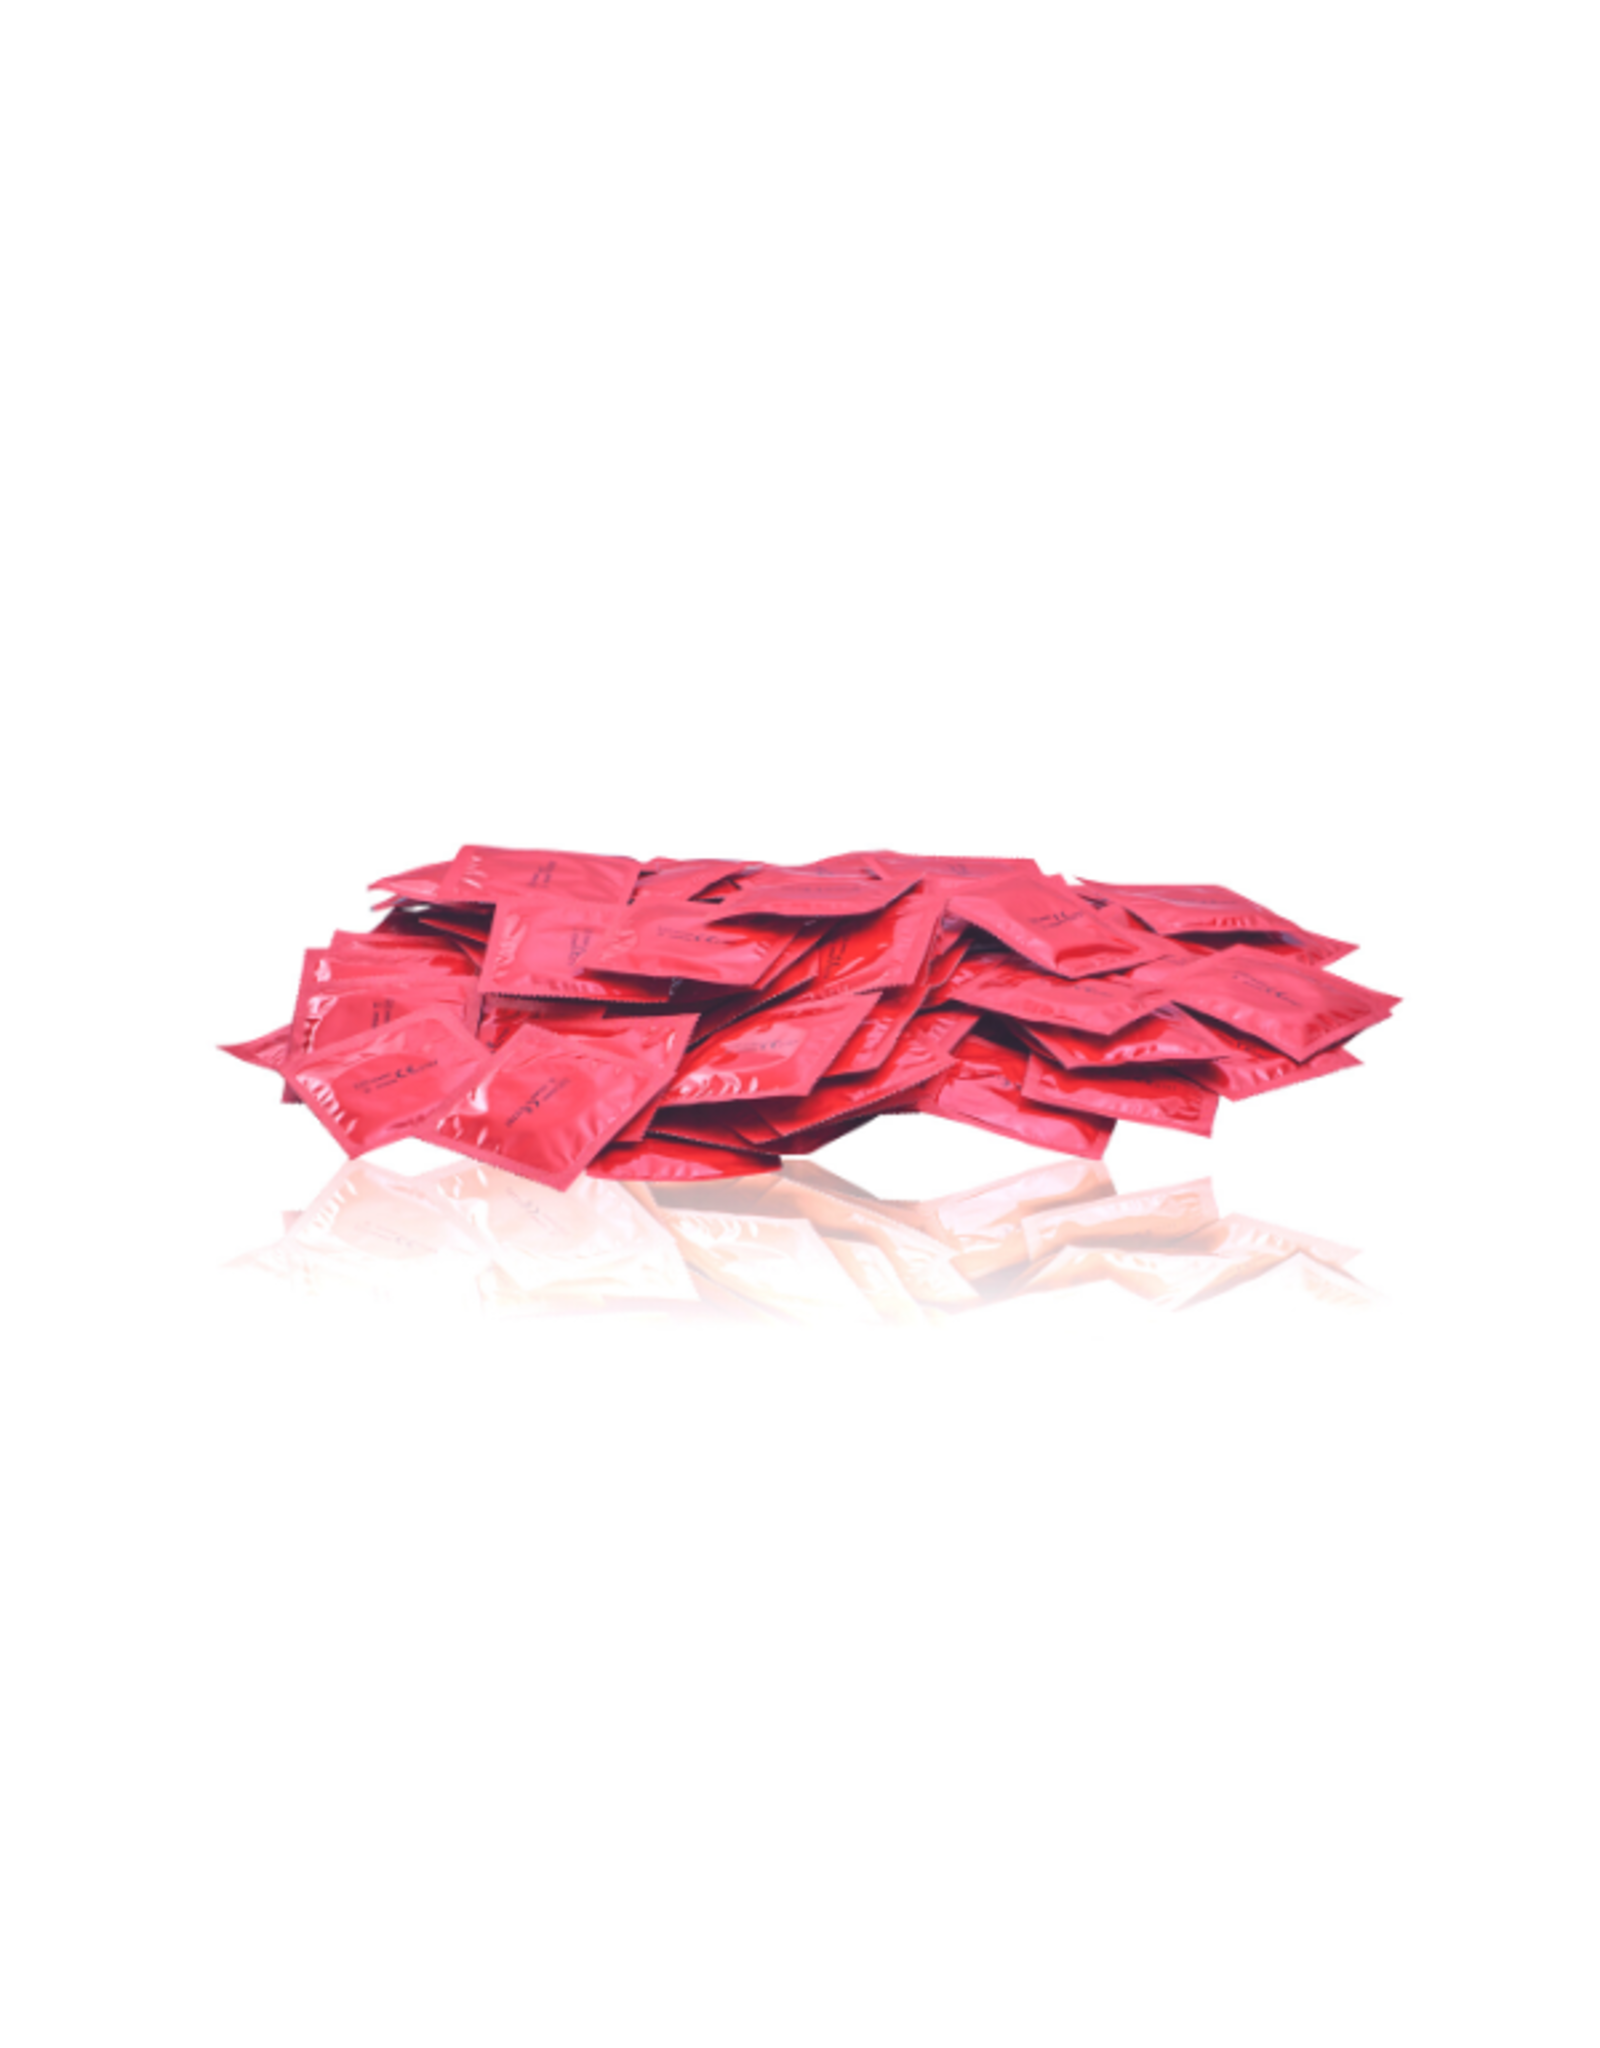 TOP Kondome TOP Kondome RED mit Erdbeeraroma - 100 Stück